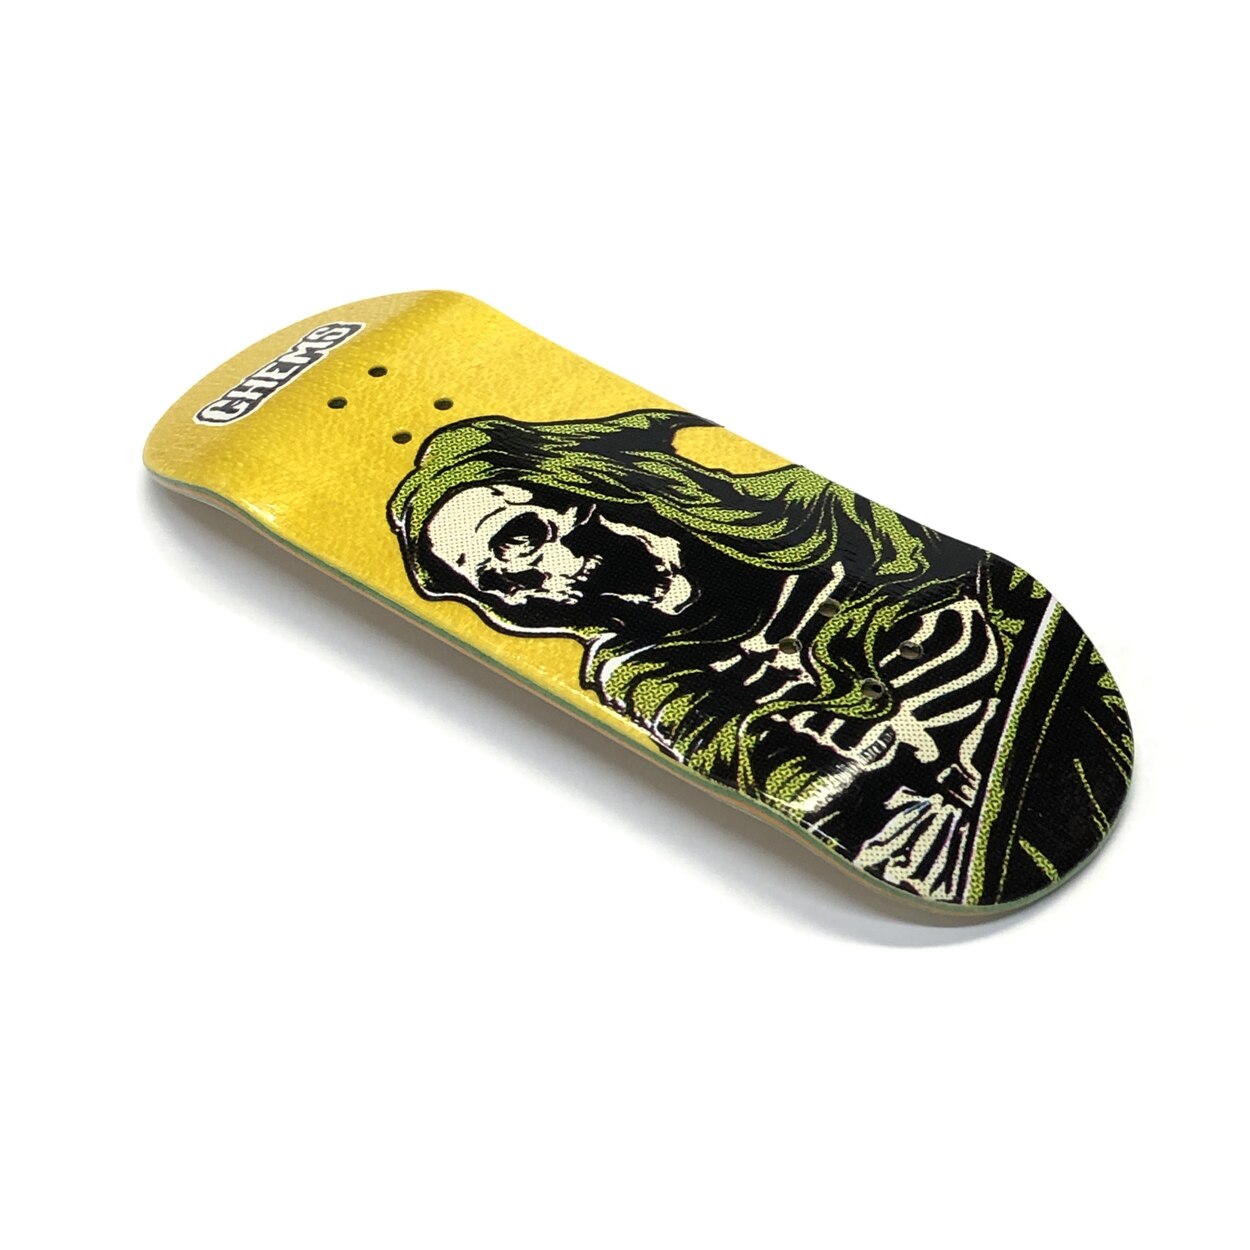 Chems x DK Yellow/Green Reaper Fingerboard Deck - O-Shape